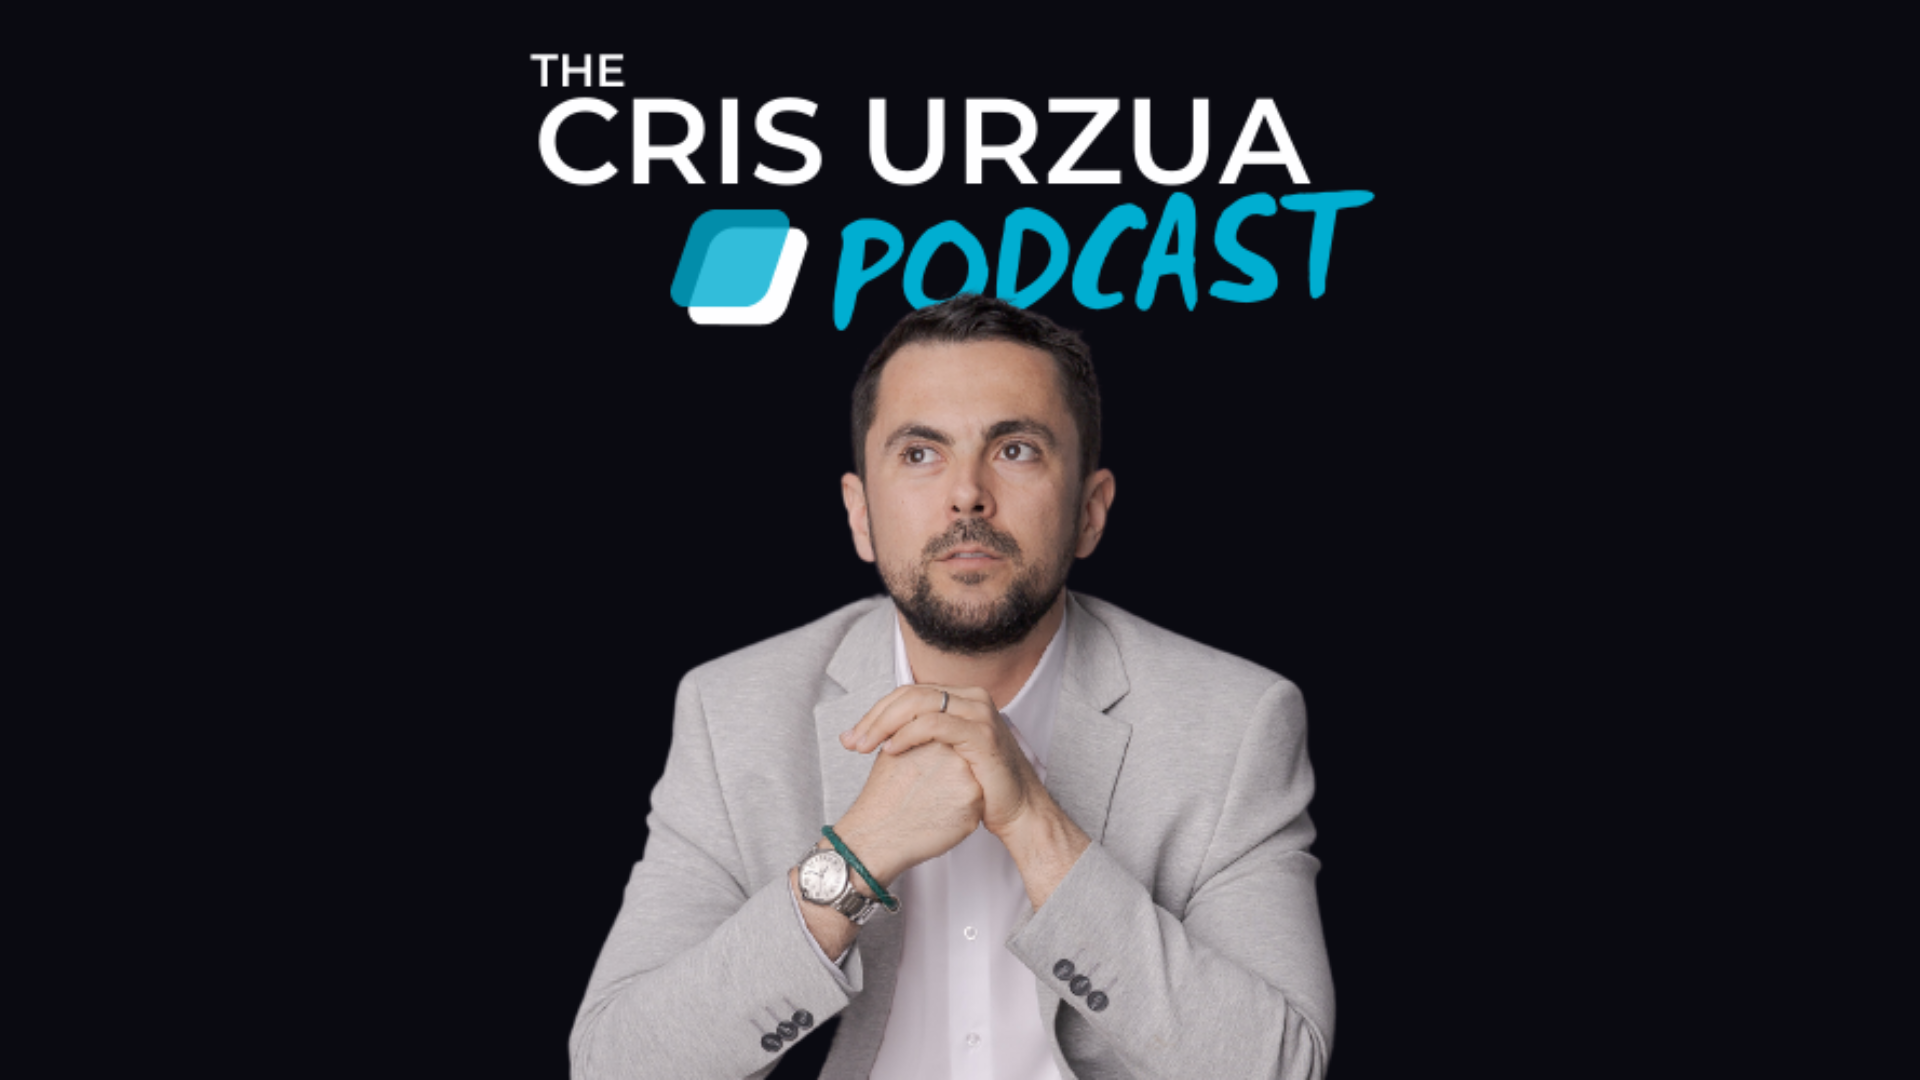 The Cris Urzua Podcast – Episode 2